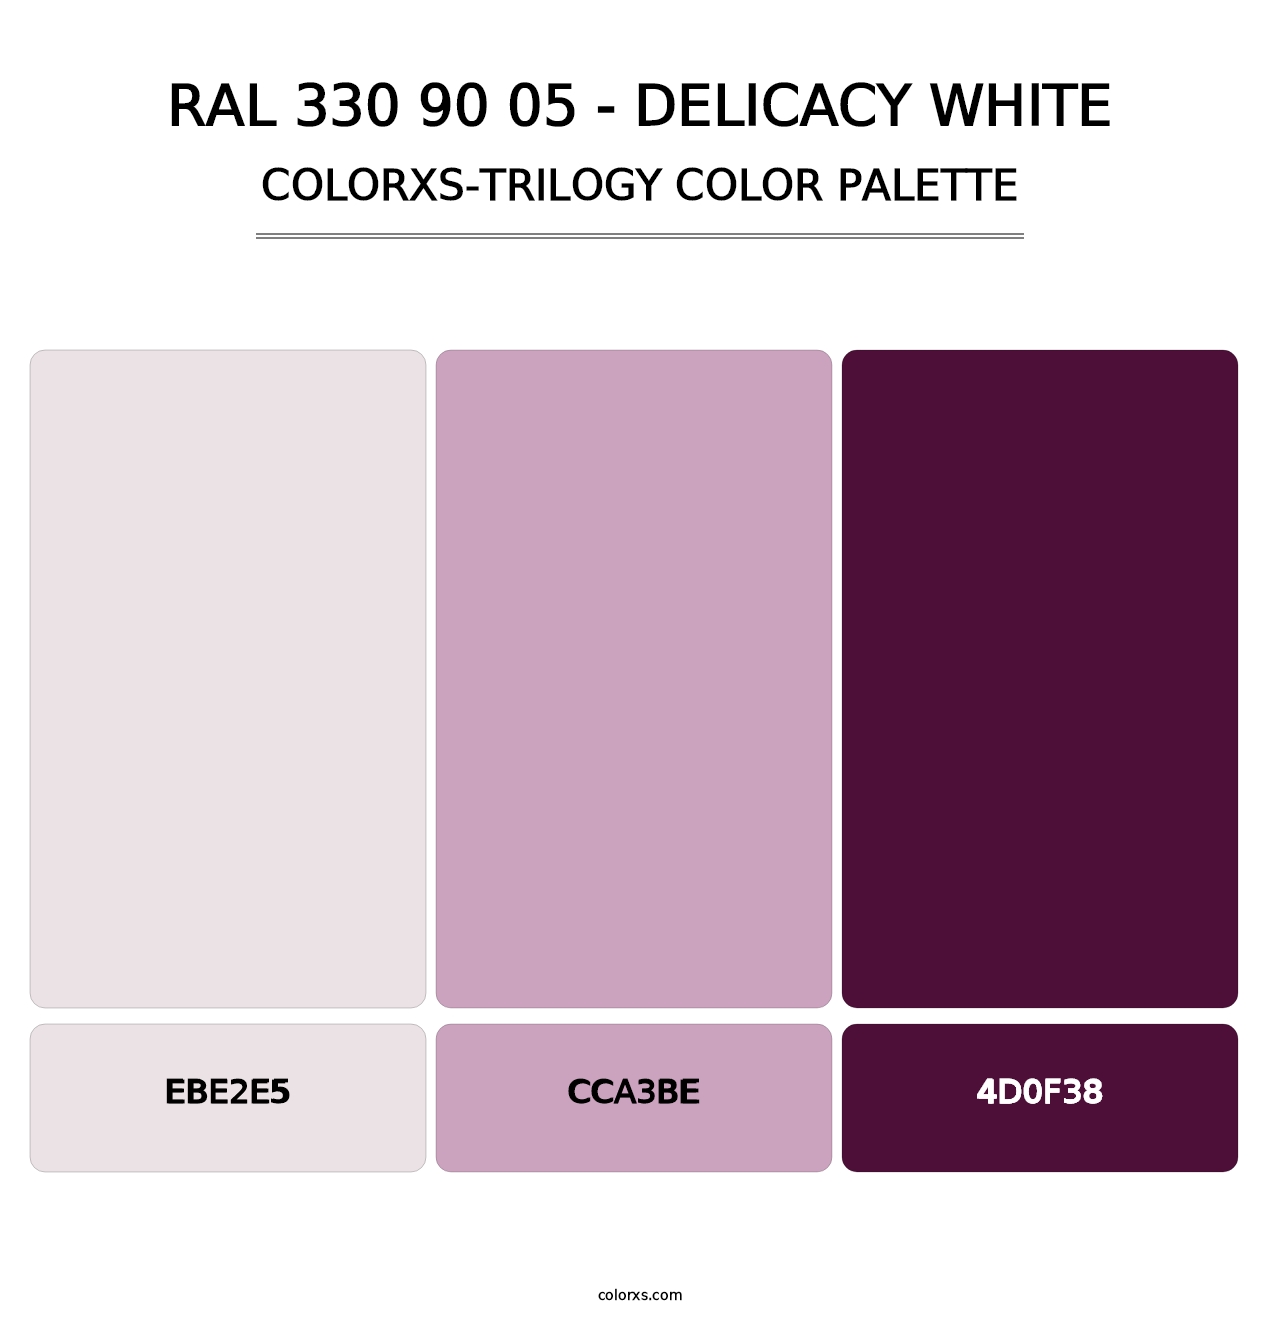 RAL 330 90 05 - Delicacy White - Colorxs Trilogy Palette